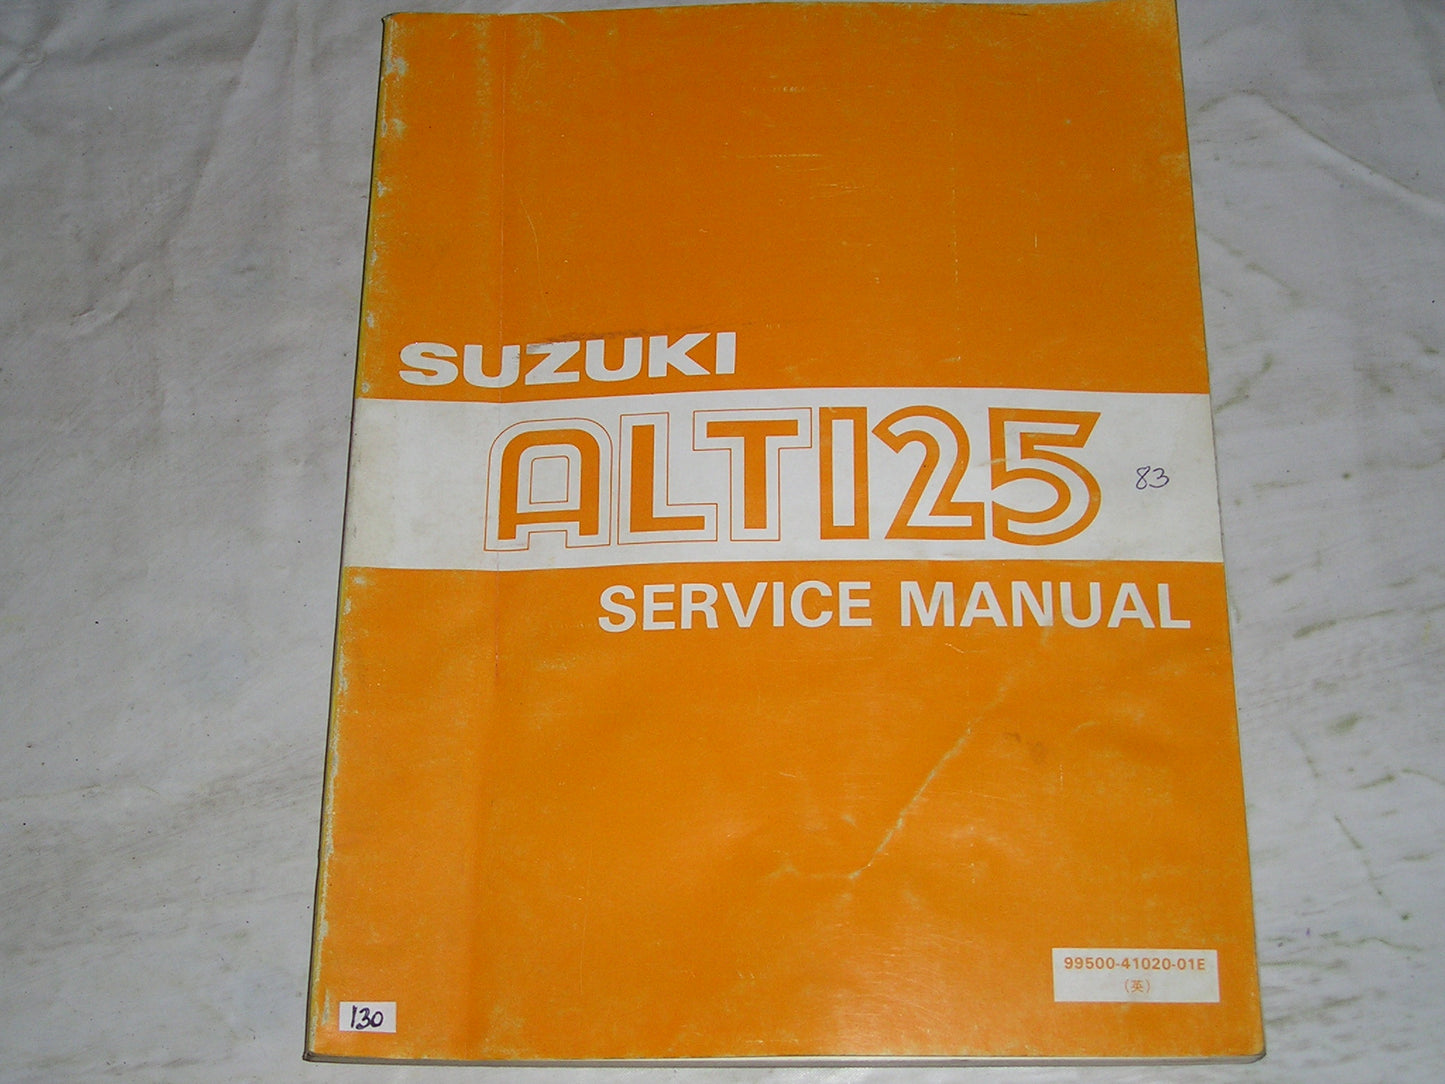 SUZUKI ALT125 1983  Service Manual  99500-41020-01E  #114